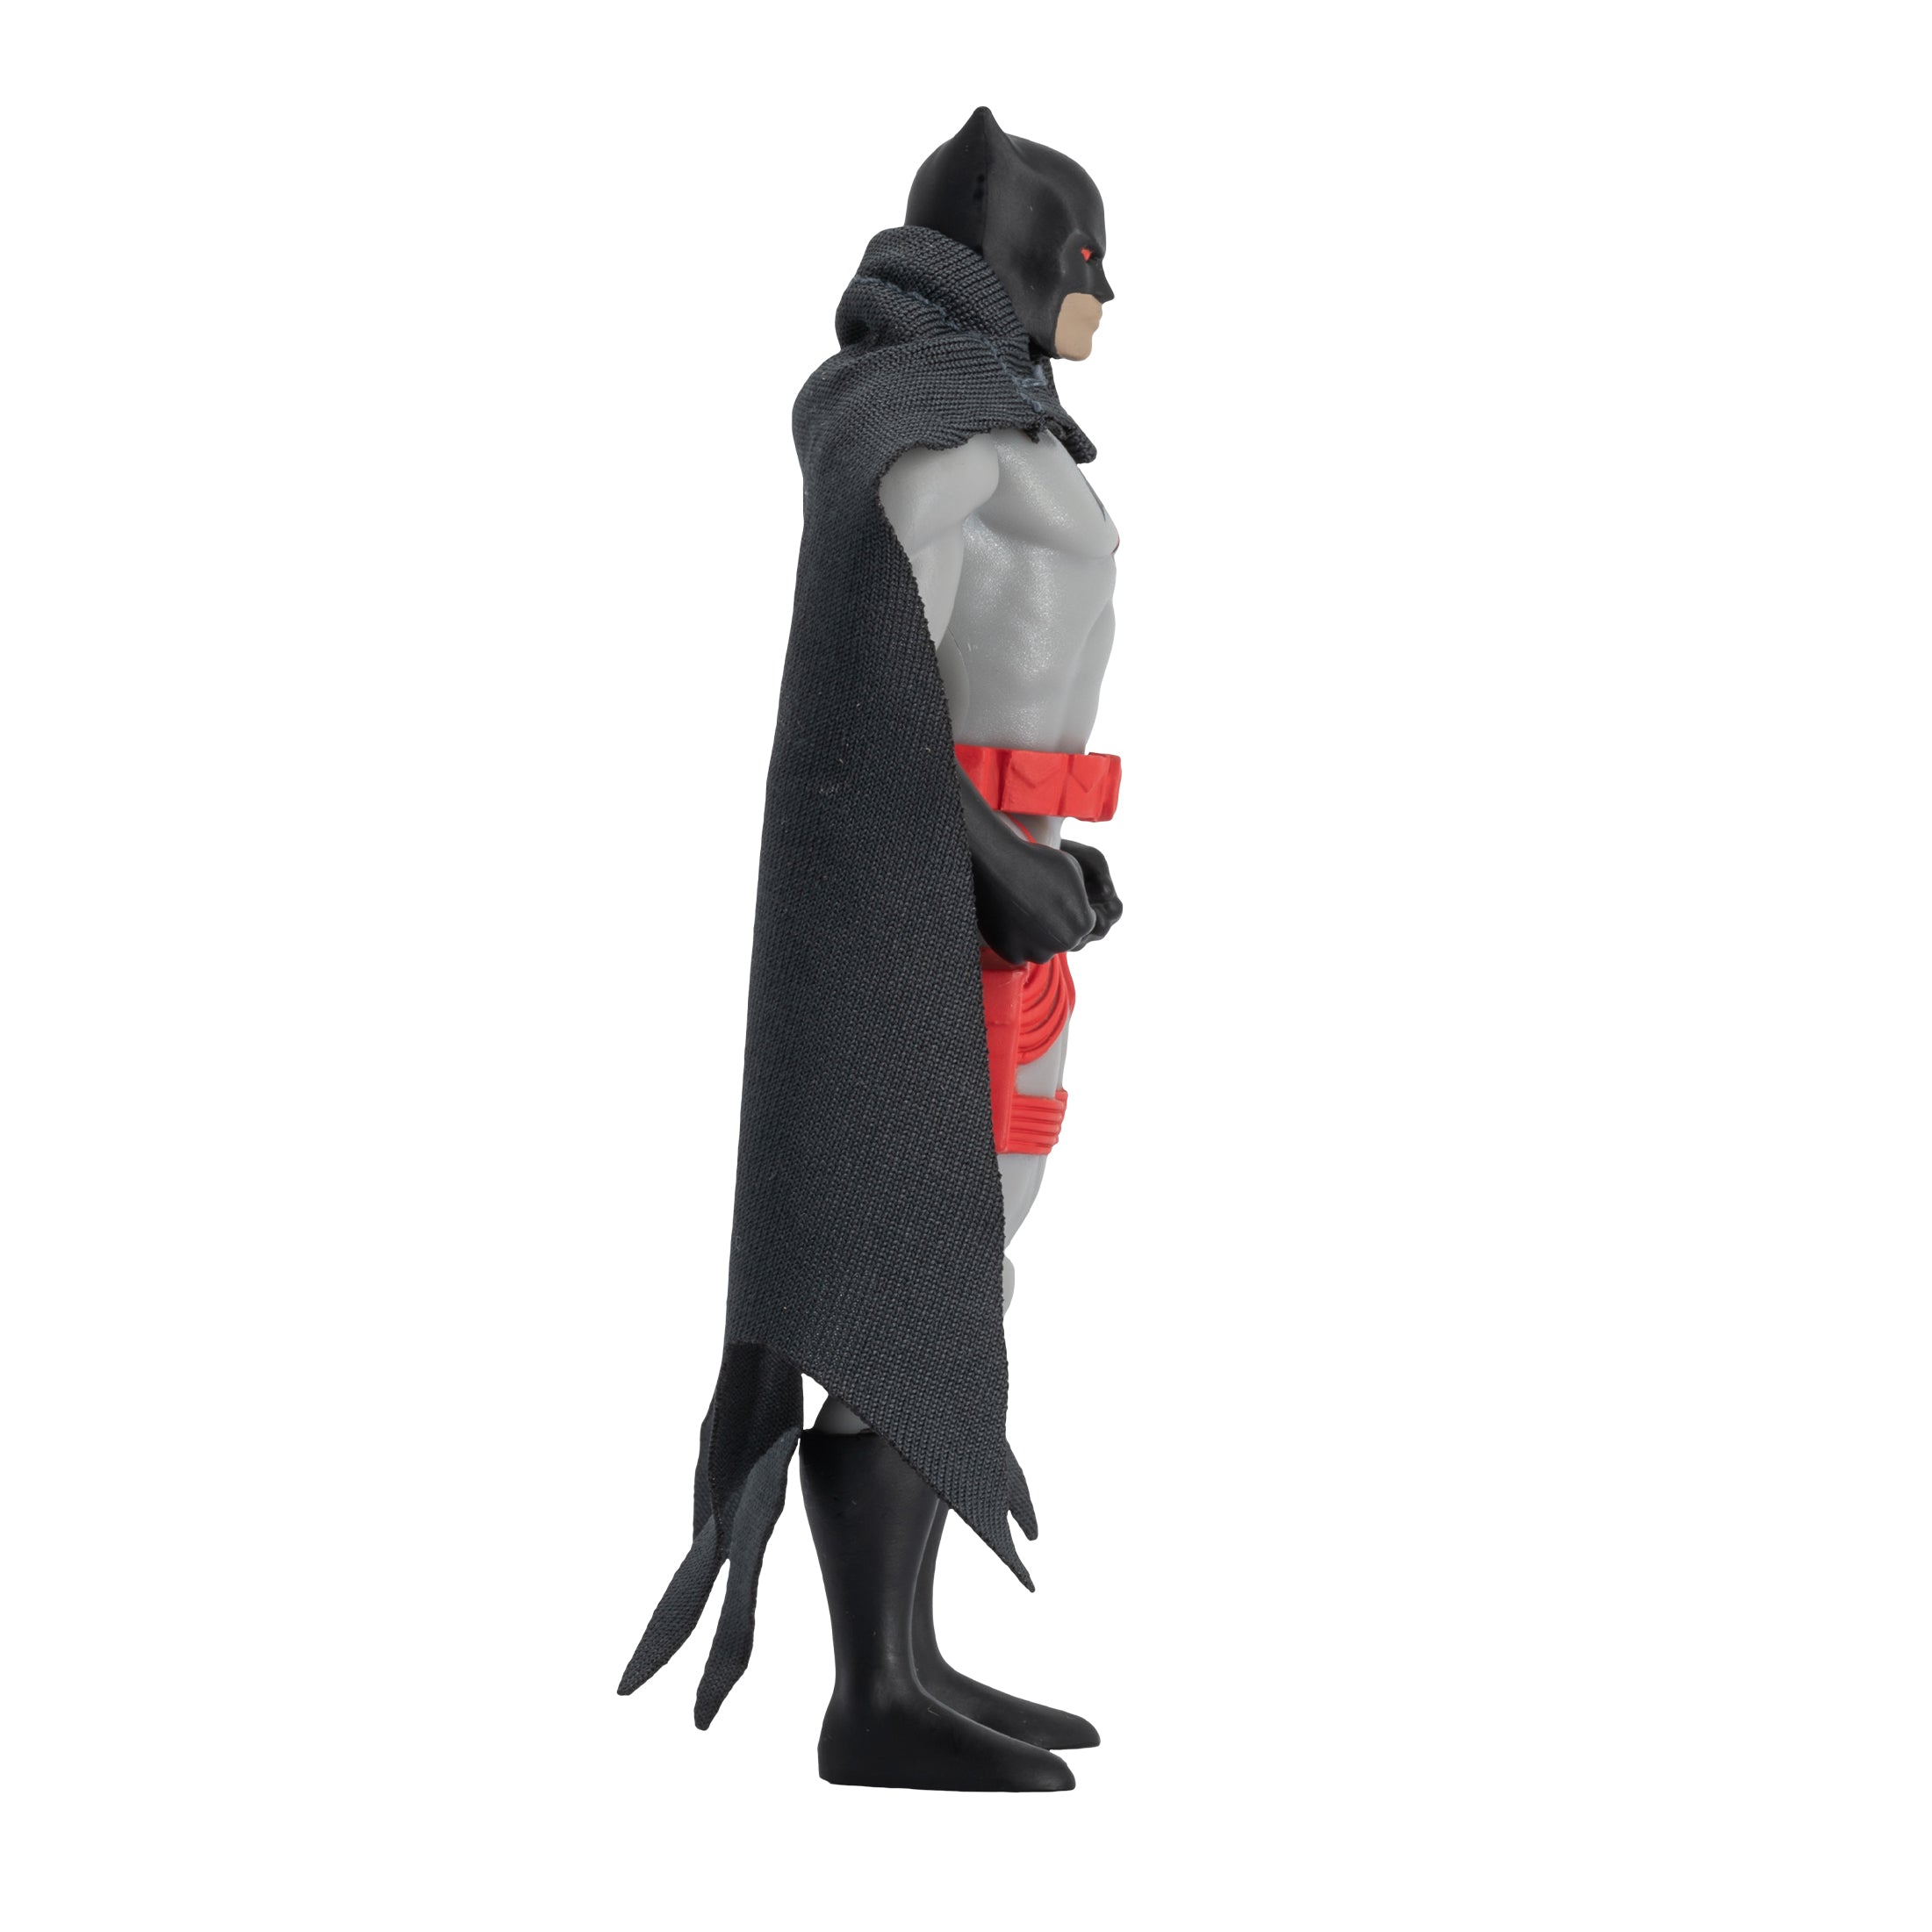 McFarlane Super Powers Figura de Accion: DC Flashpoint - Batman Thomas Wayne 4.5 Pulgadas